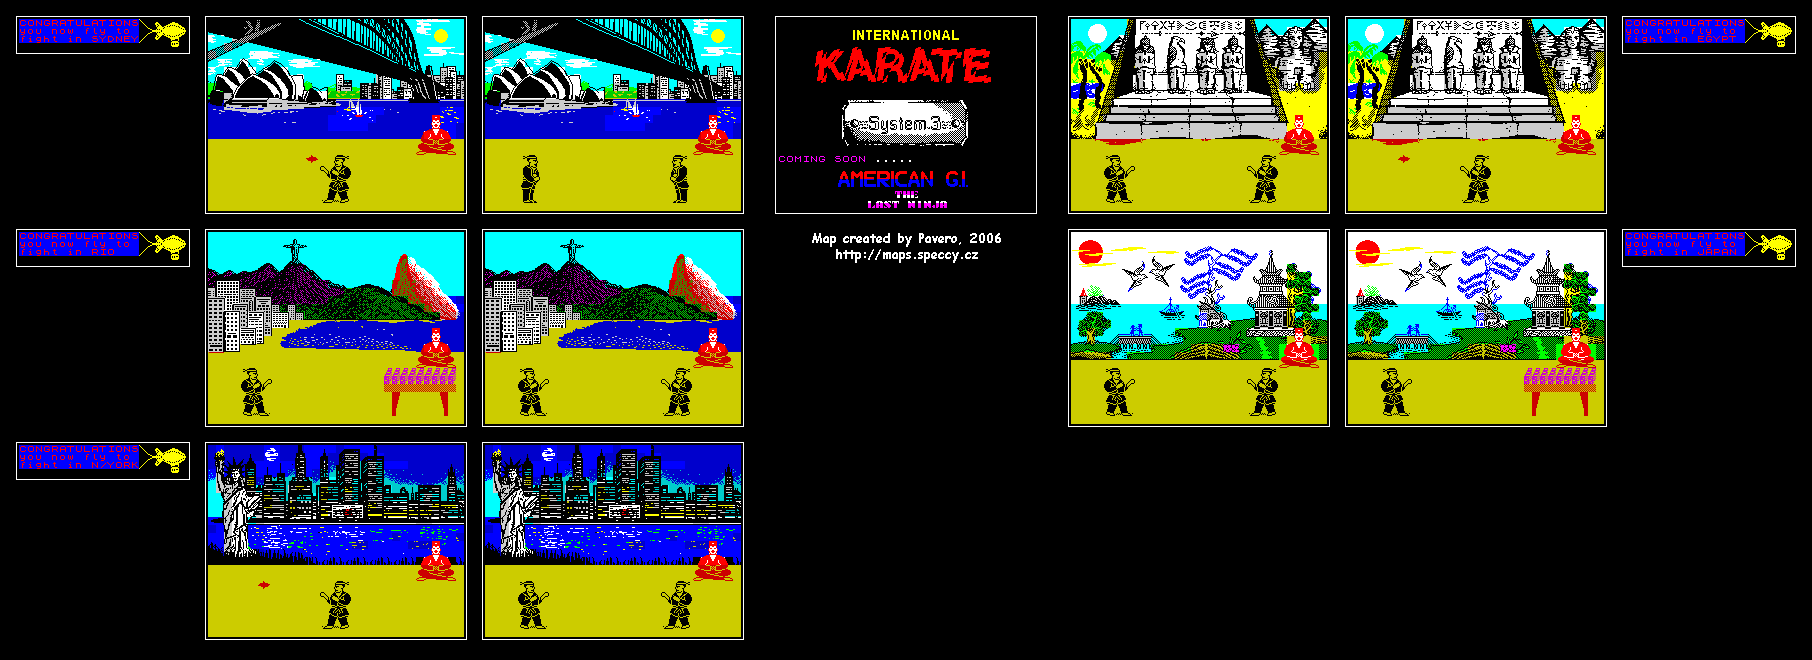 International Karate - The Map